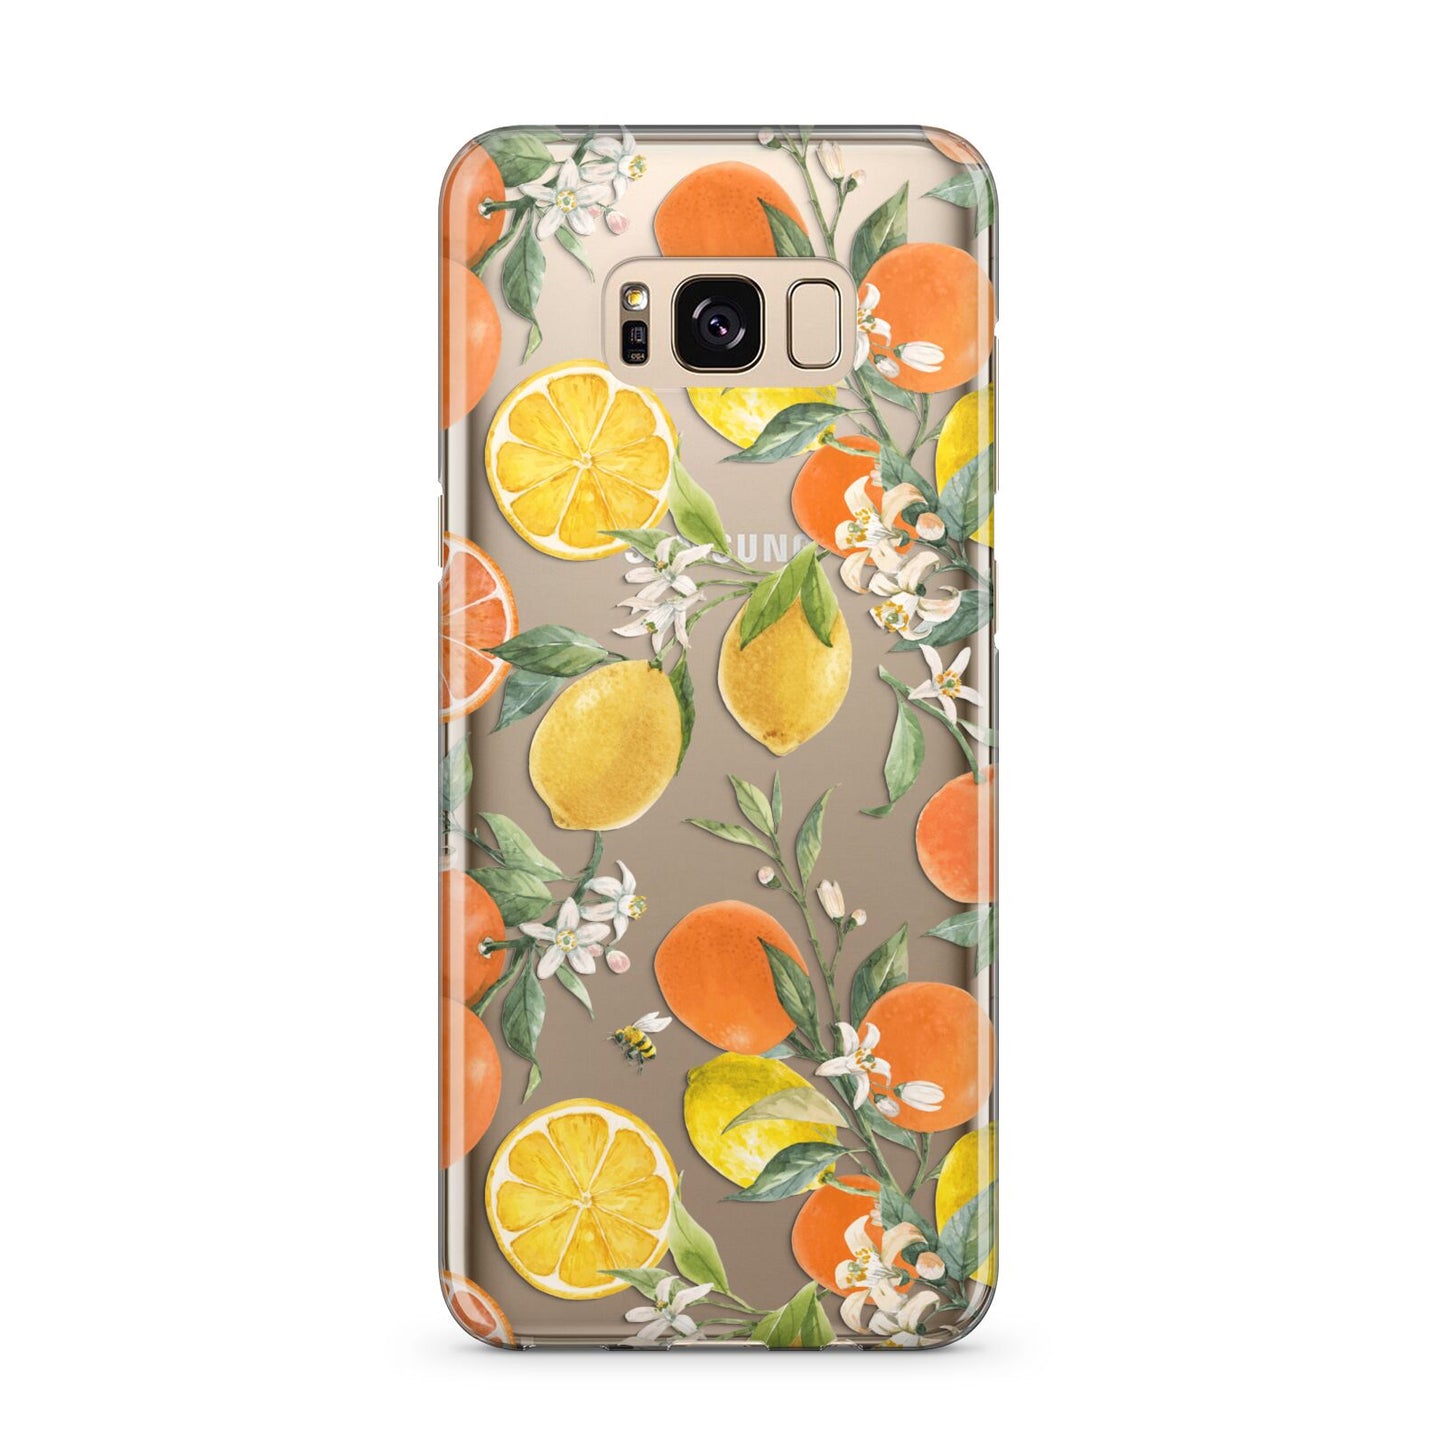 Lemons and Oranges Samsung Galaxy S8 Plus Case